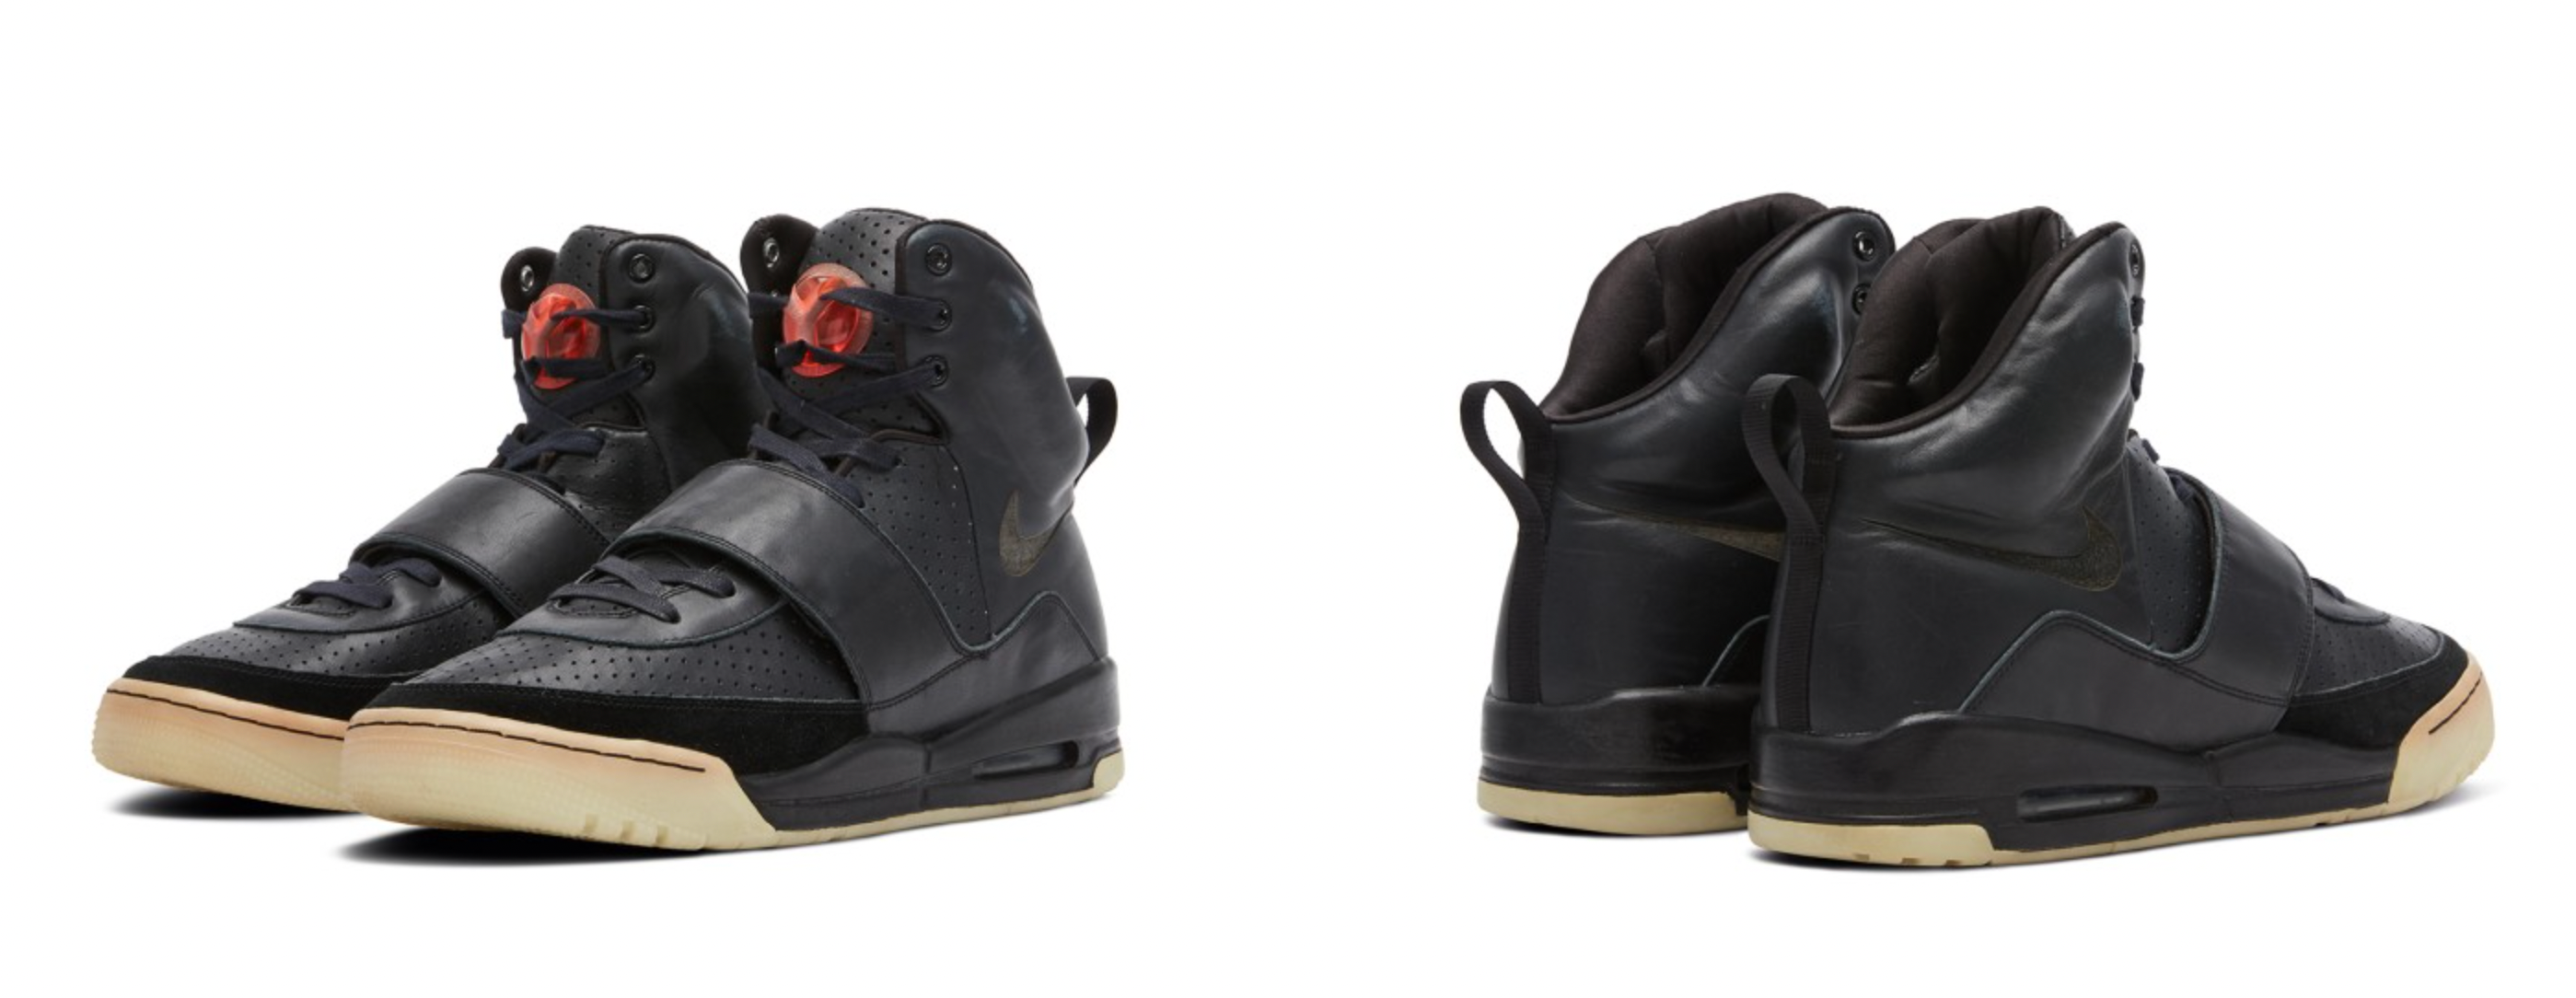 Kanye West’s Nike Air Yeezy 1 Prototypes